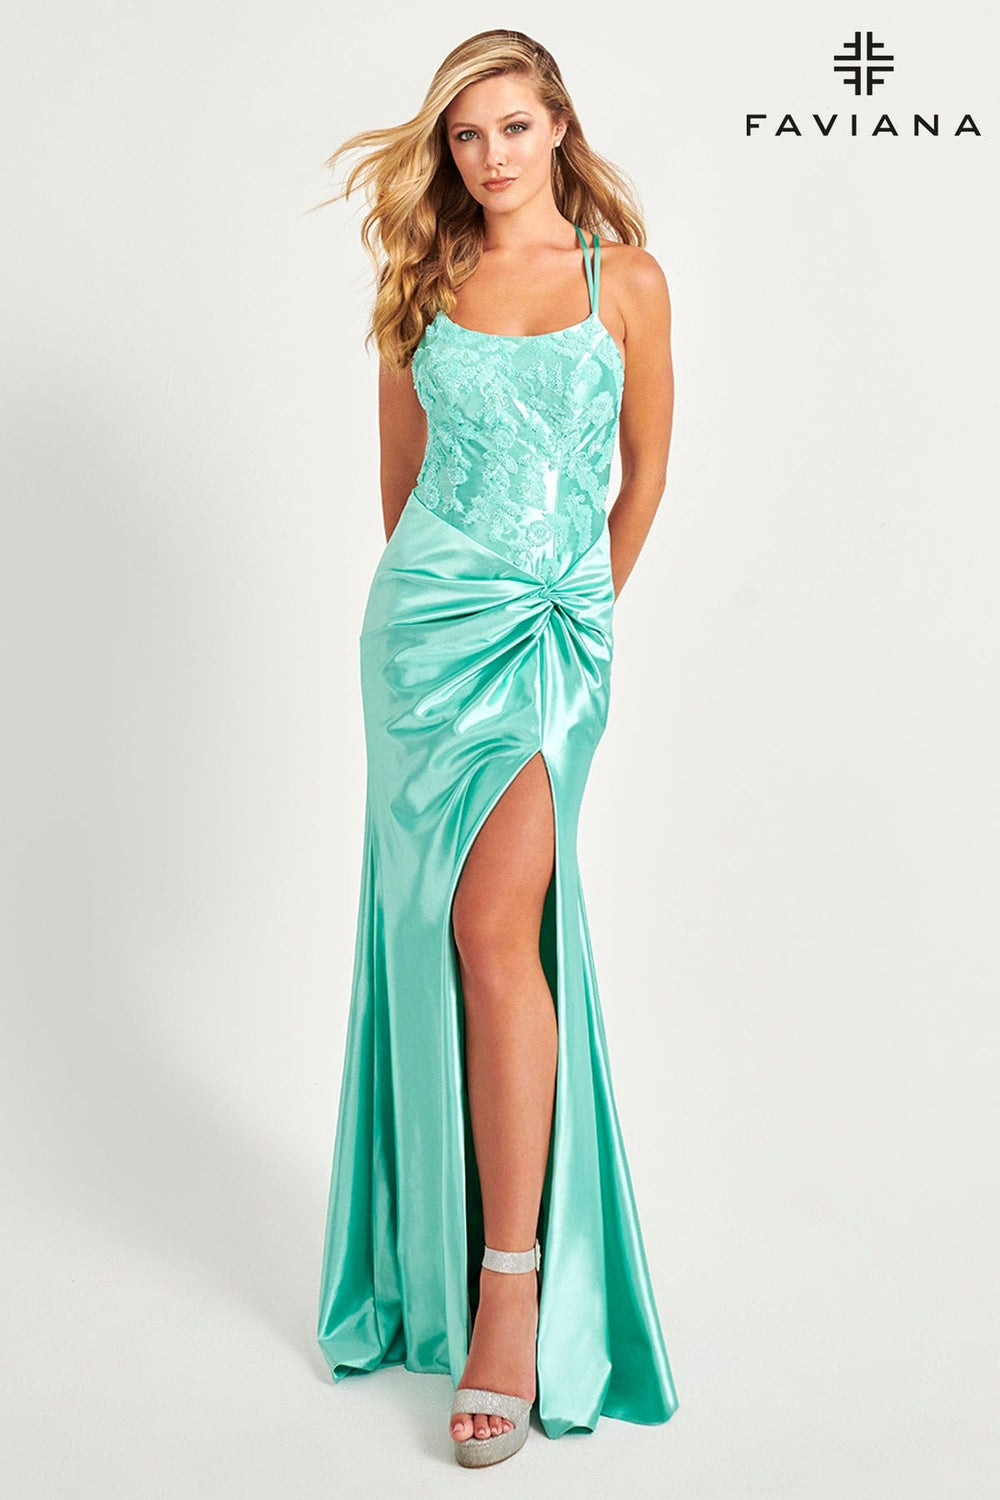 Faviana Prom Dress Faviana 11005 Dress